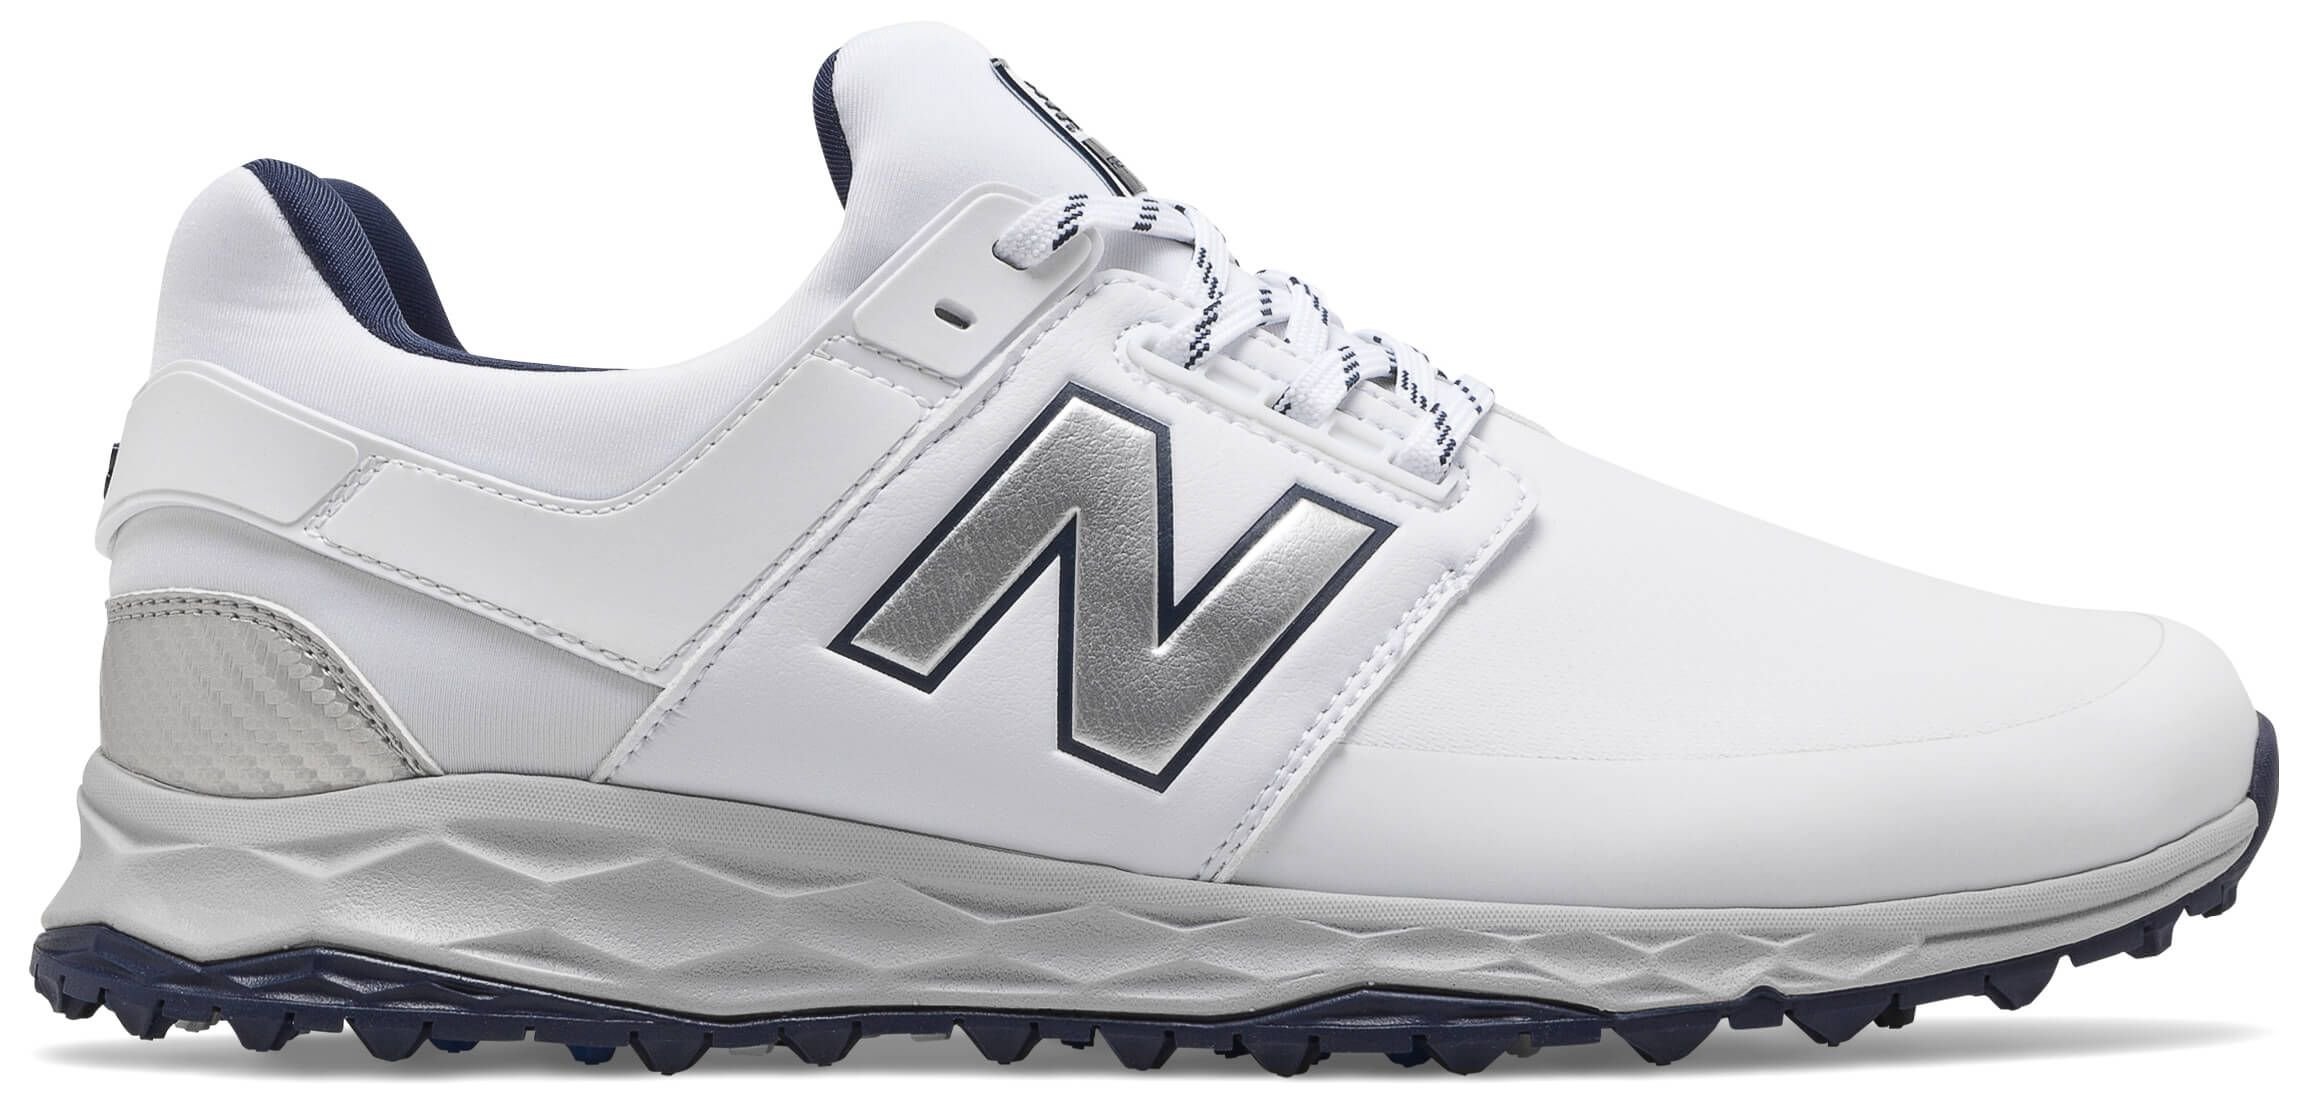 New Balance NB Fresh Foam Links SL Golf Shoes - White/Navy